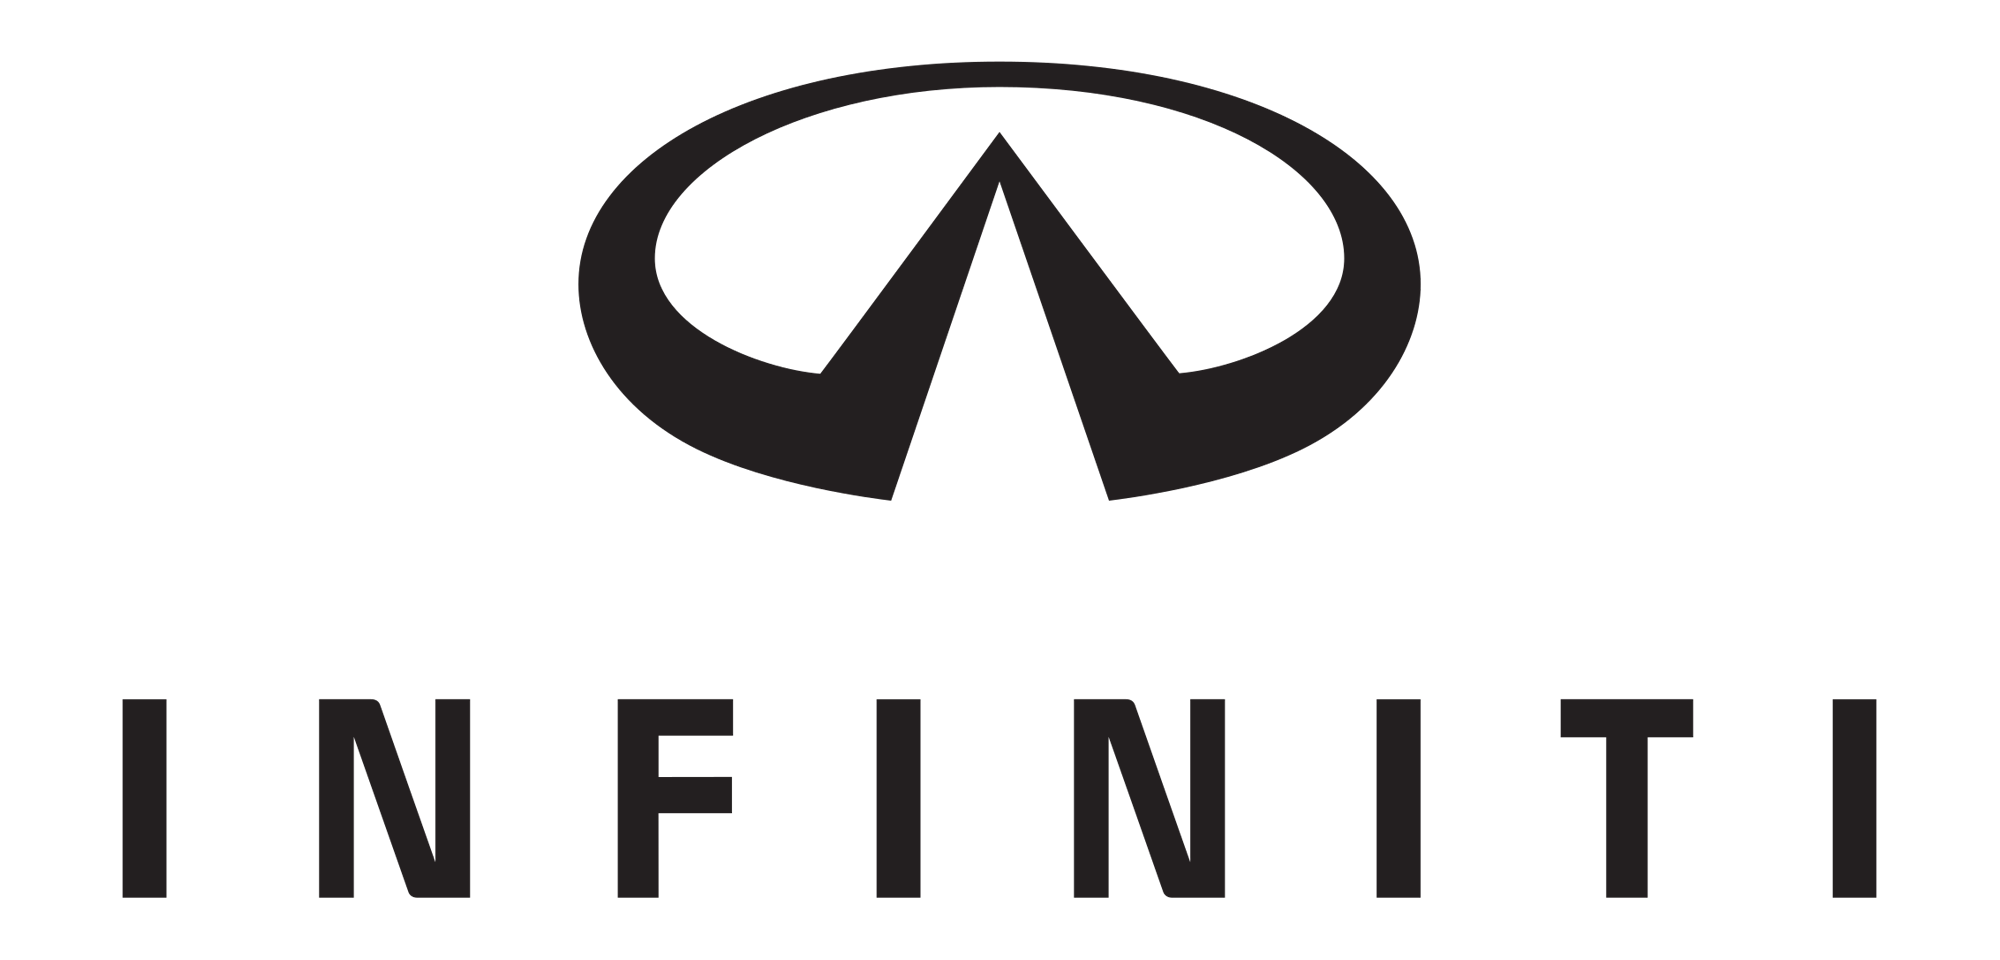 Infiniti_logo.svg.png